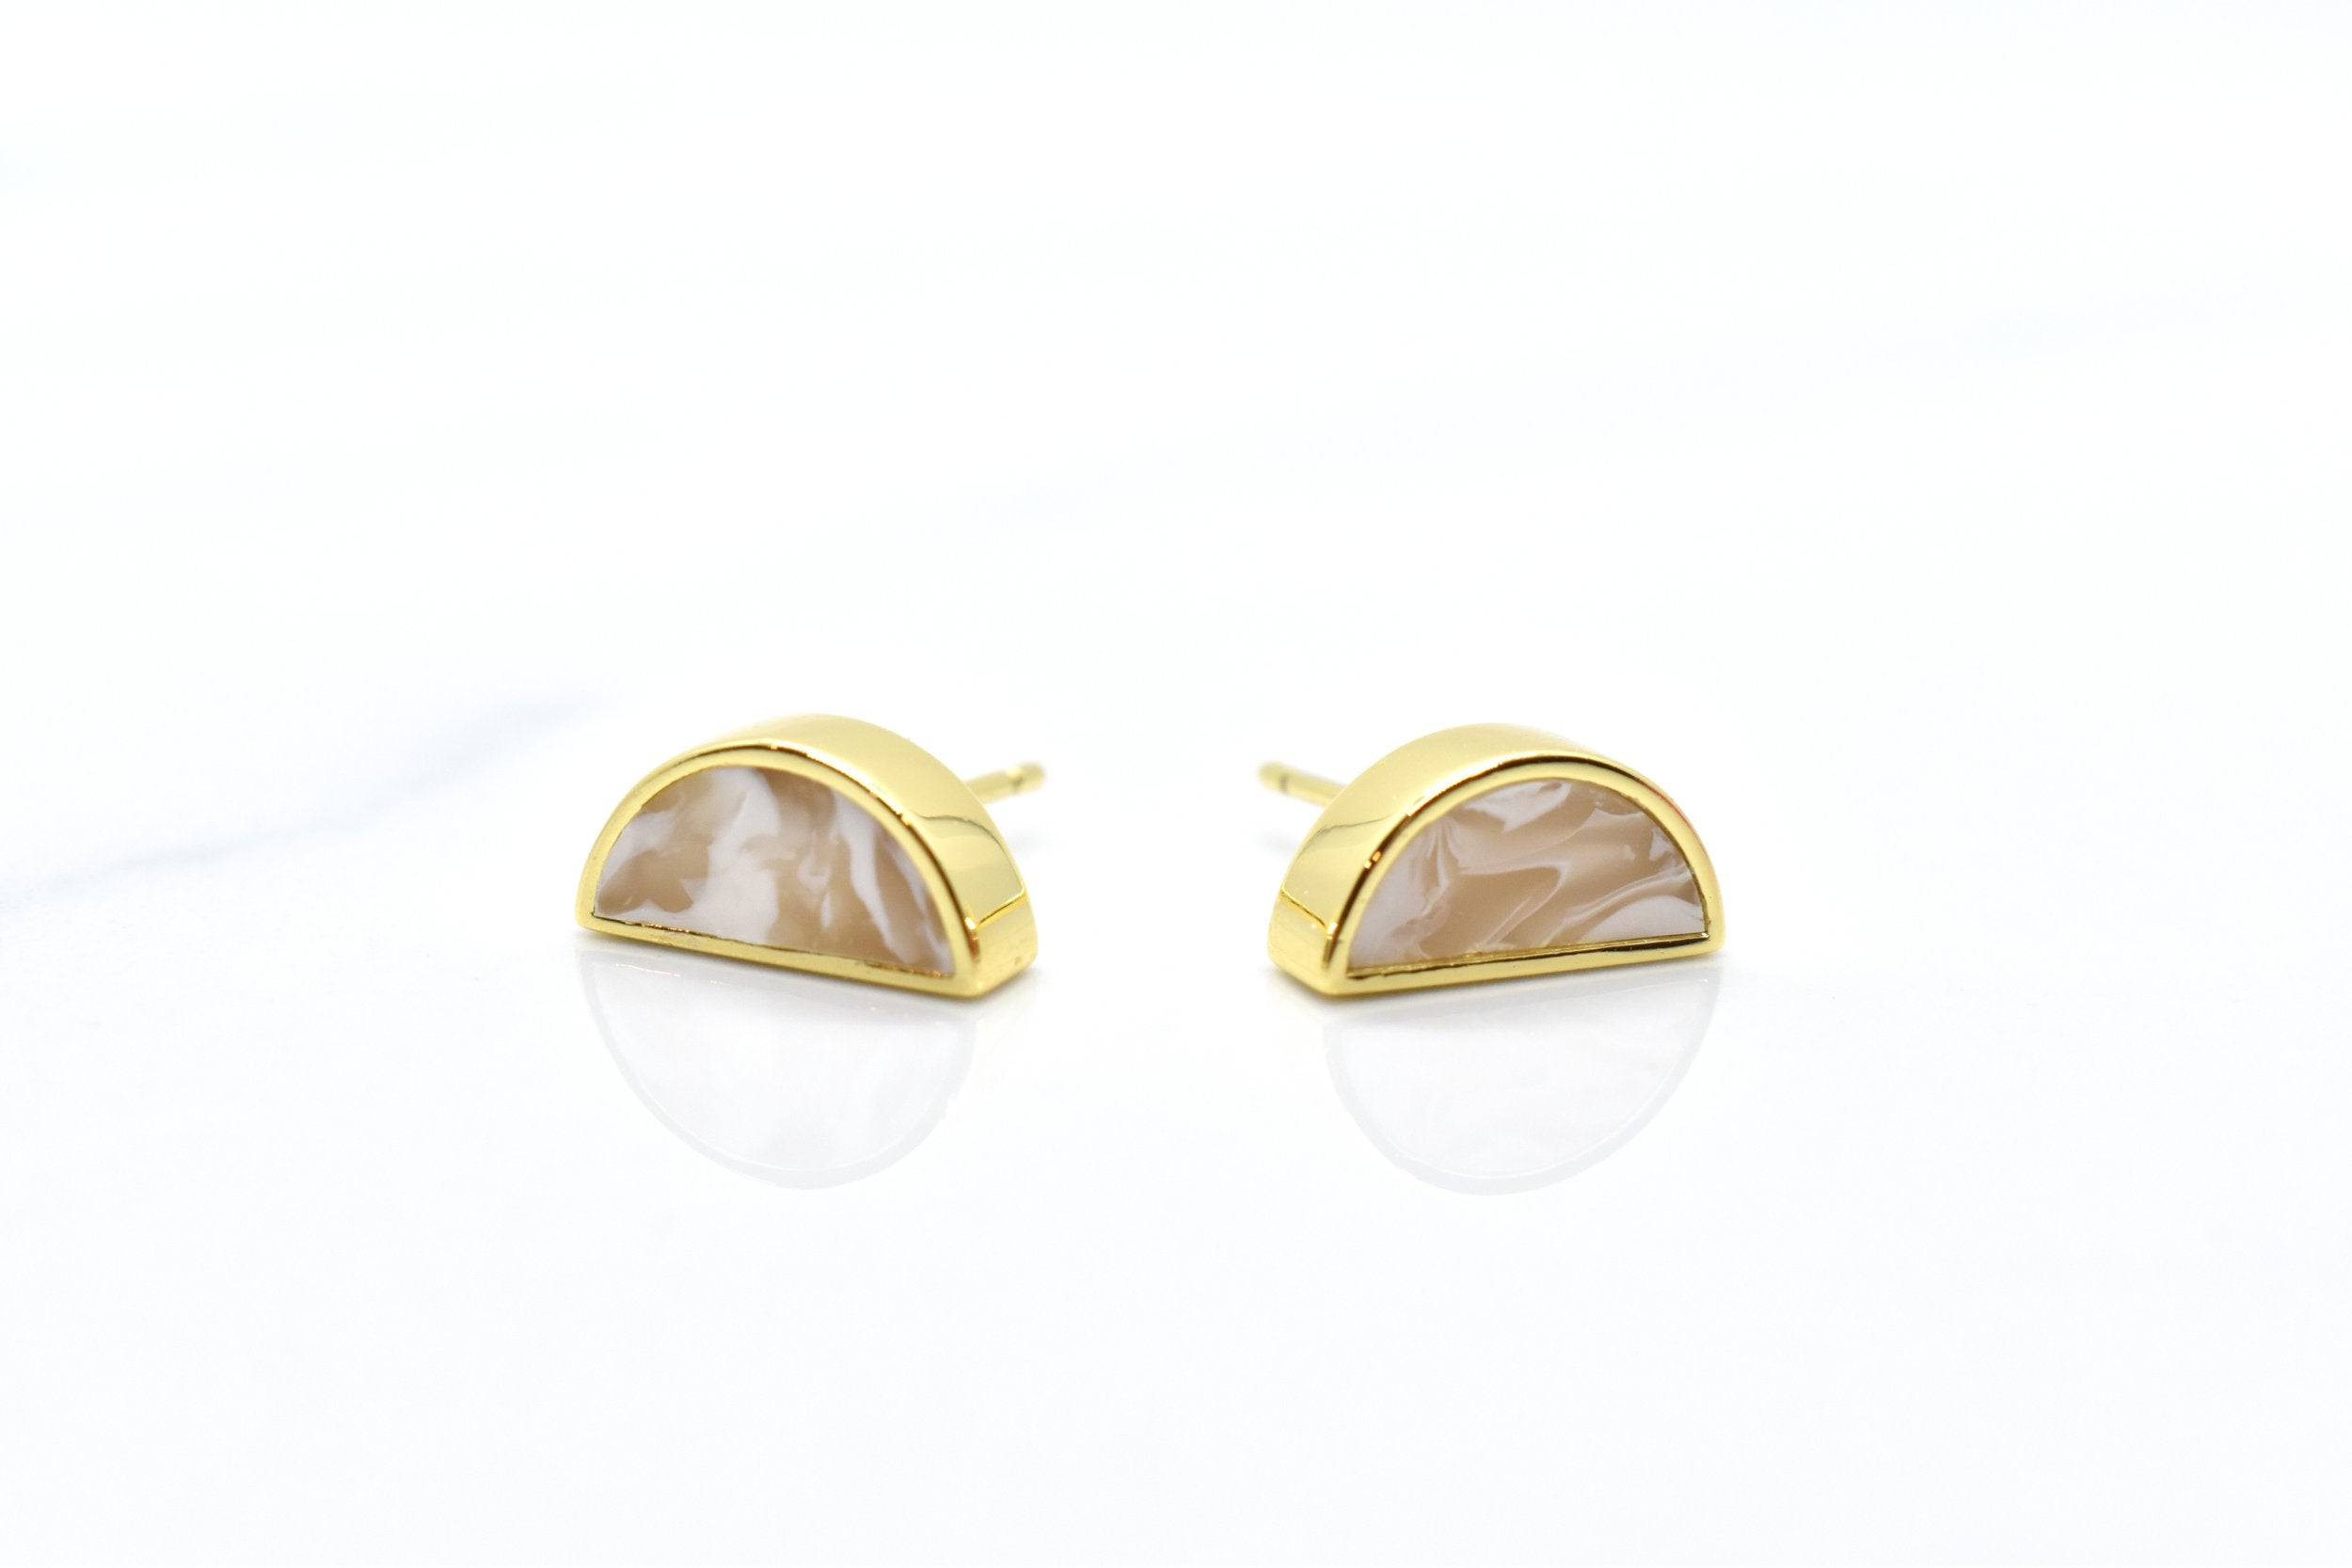 gold half moon stud earring set in crystal quartz.